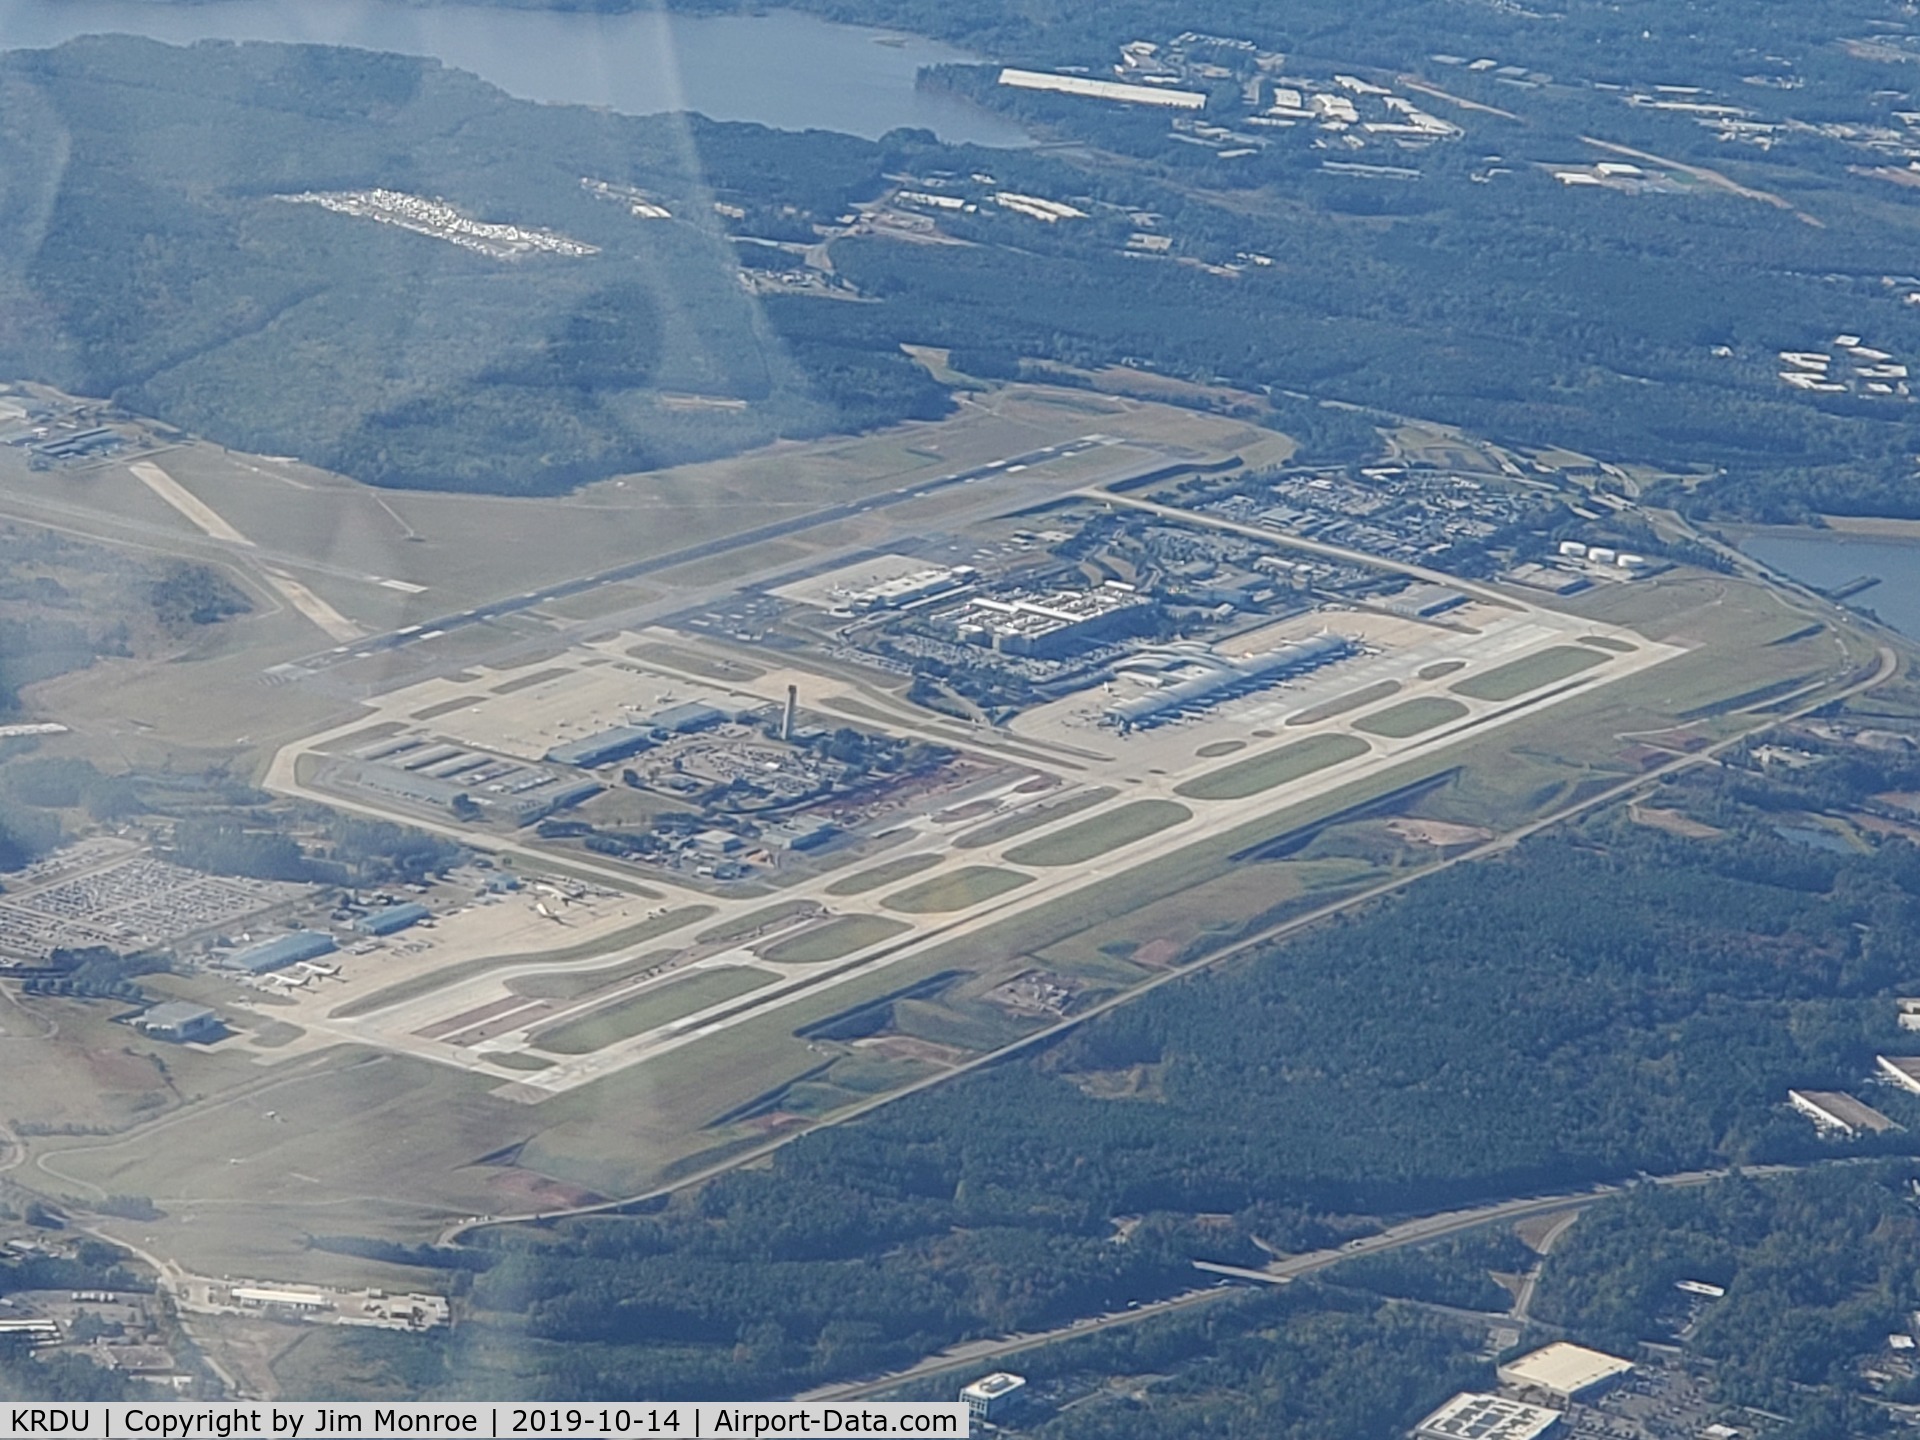 Raleigh-durham International Airport (RDU) - On an ANgel Flight from Suffolk, Virginia to Monroe, NC. Taken from 8,000 feet MSL.